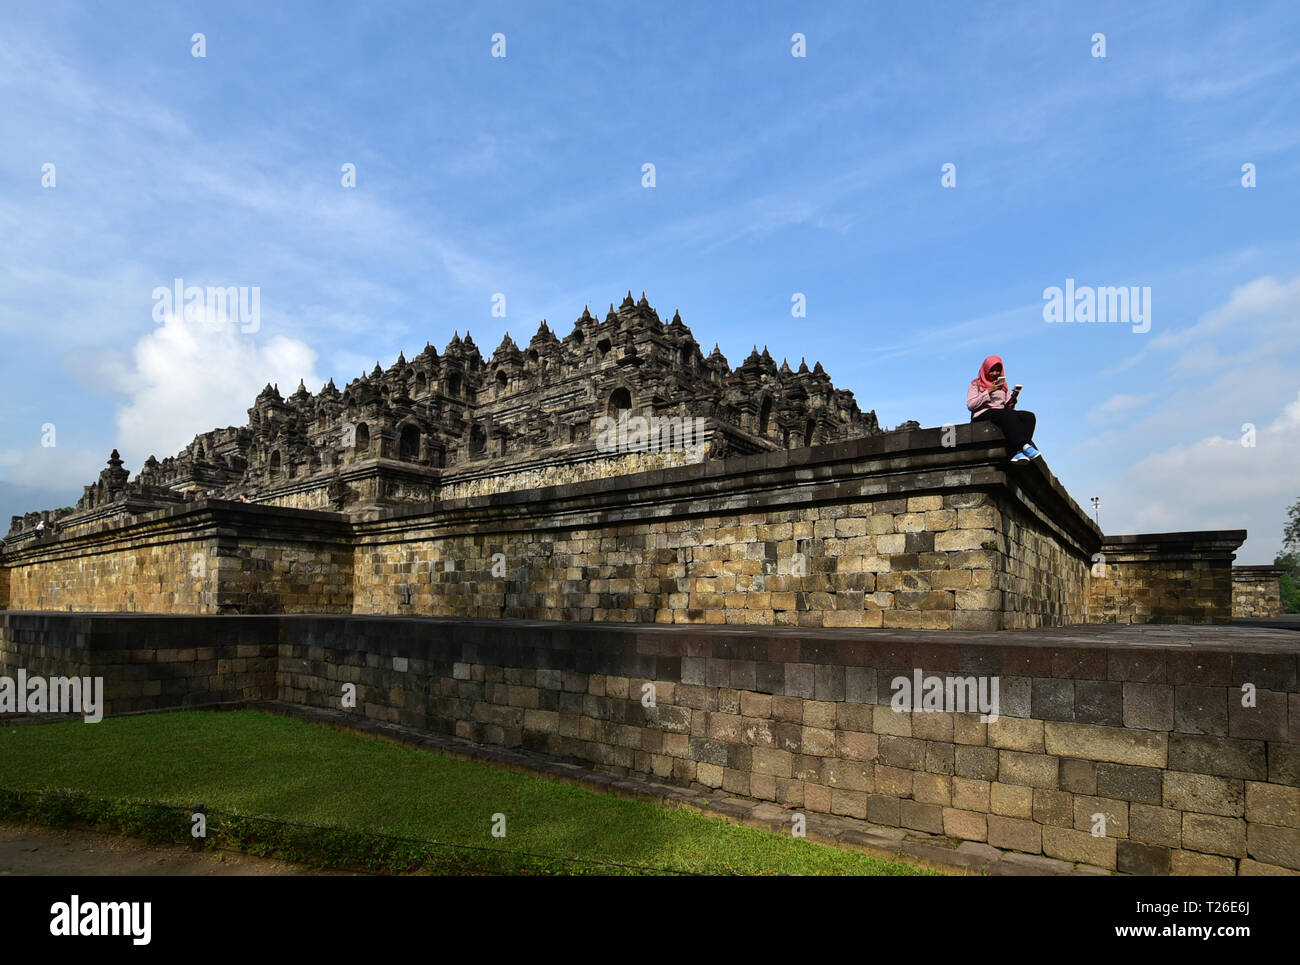 BOROBUDUR, Indonesien - 08.23.2017. Junge indonesische Frau mit Smartphone im Tempel von Borobudur. Stockfoto